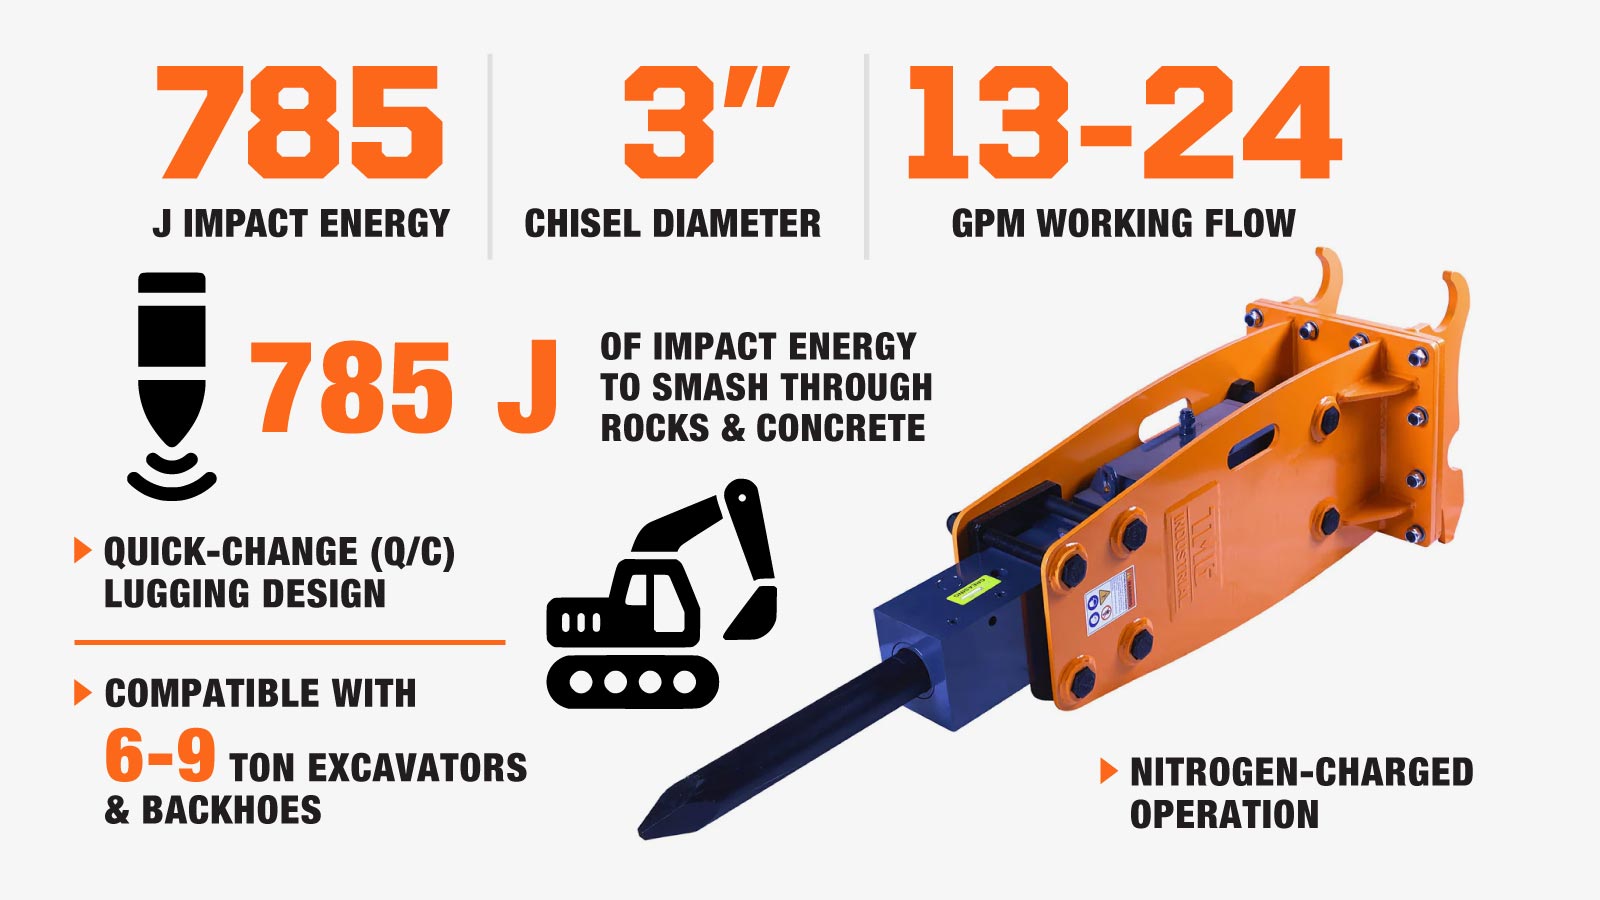 TMG Industrial 6-9 Ton Excavator/Backhoe Hydraulic Hammer Breaker, Quick Change (Q/C) Lugging, 3” Moil Point Chisel, 785 J Impact Energy, TMG-HB90Q-description-image